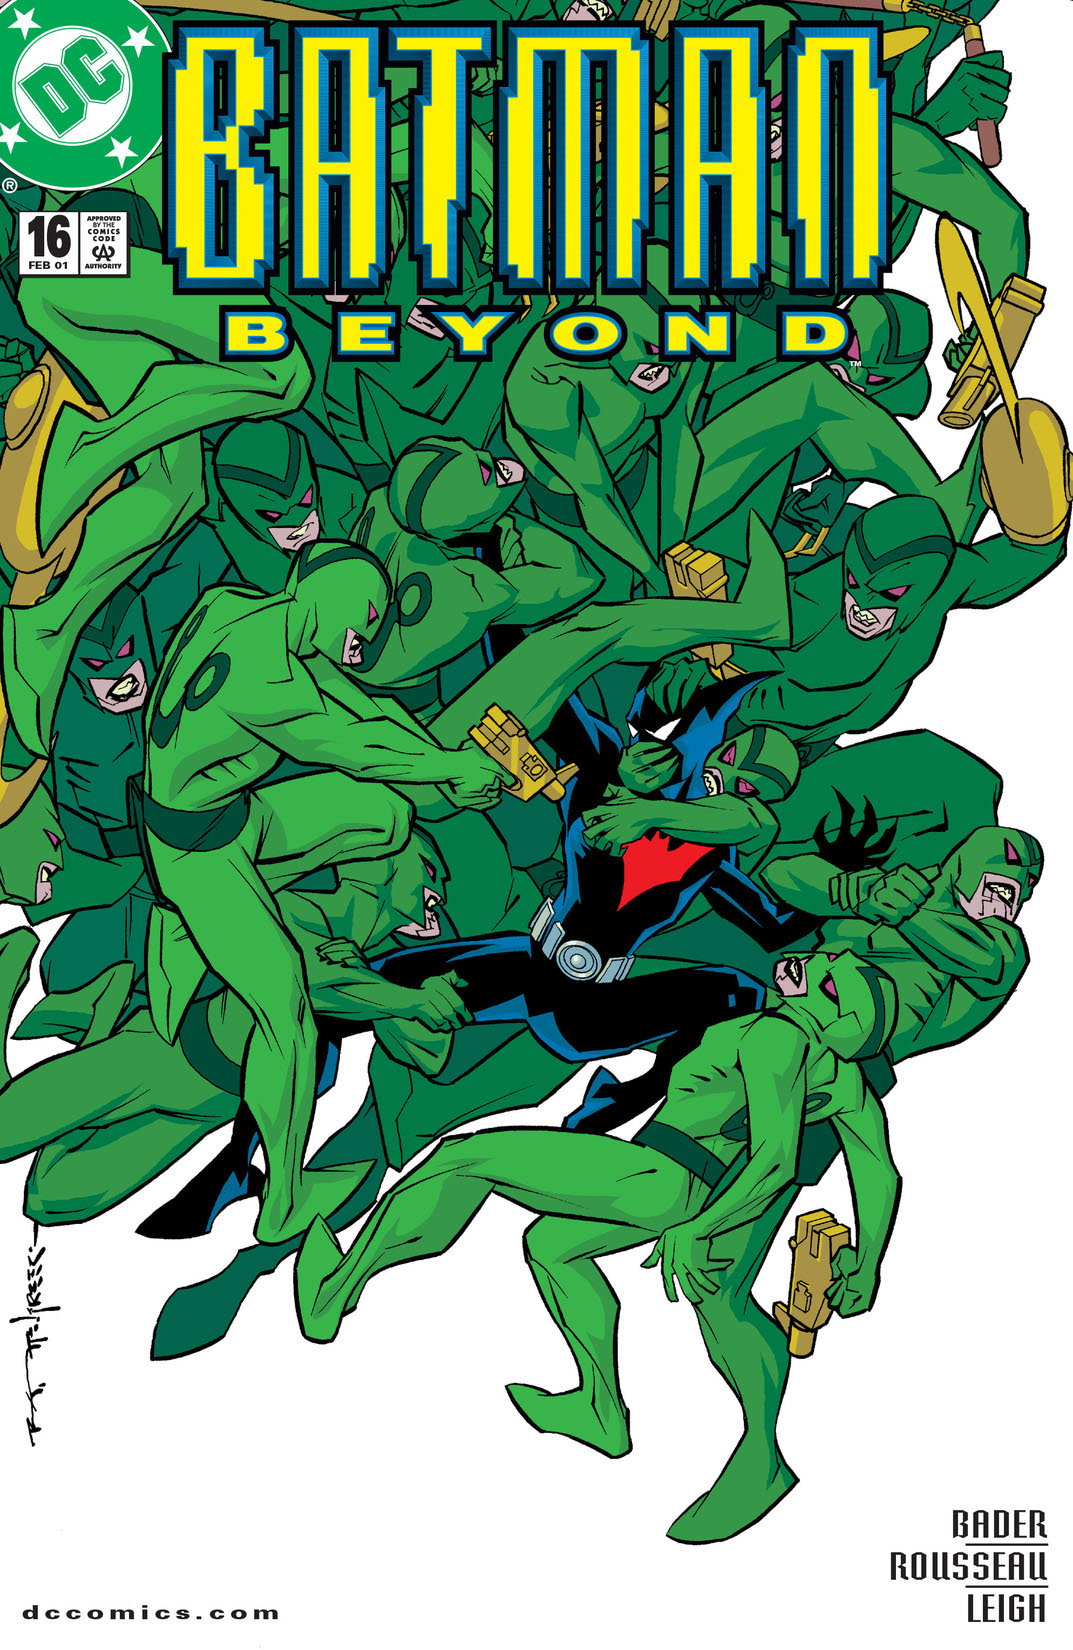 Batman Beyond (1999-) #16 preview images